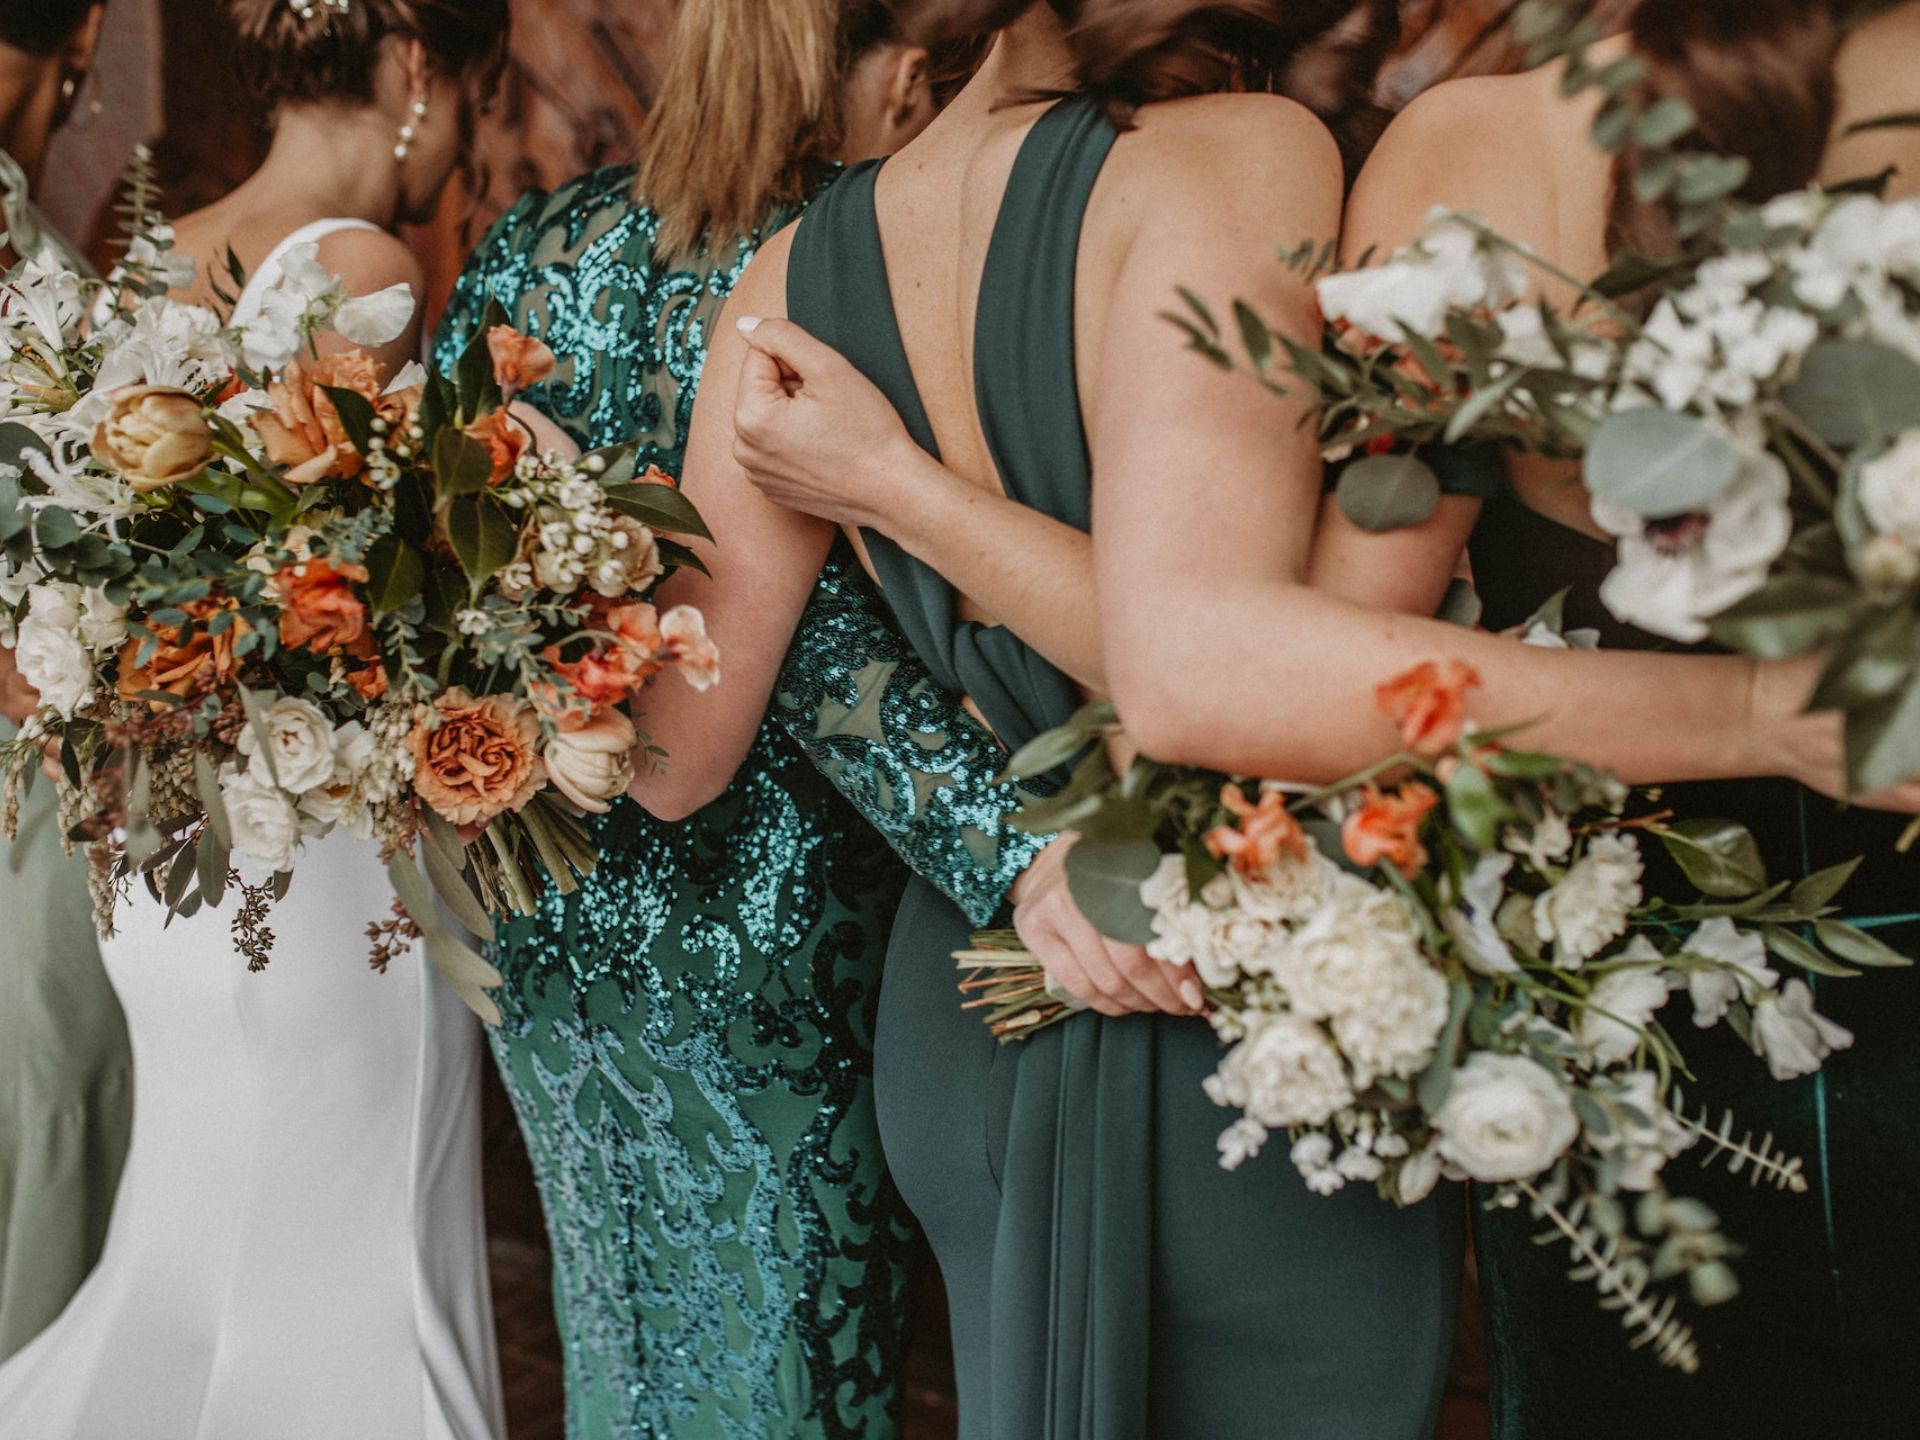 Bridesmaids wearing green dresses.